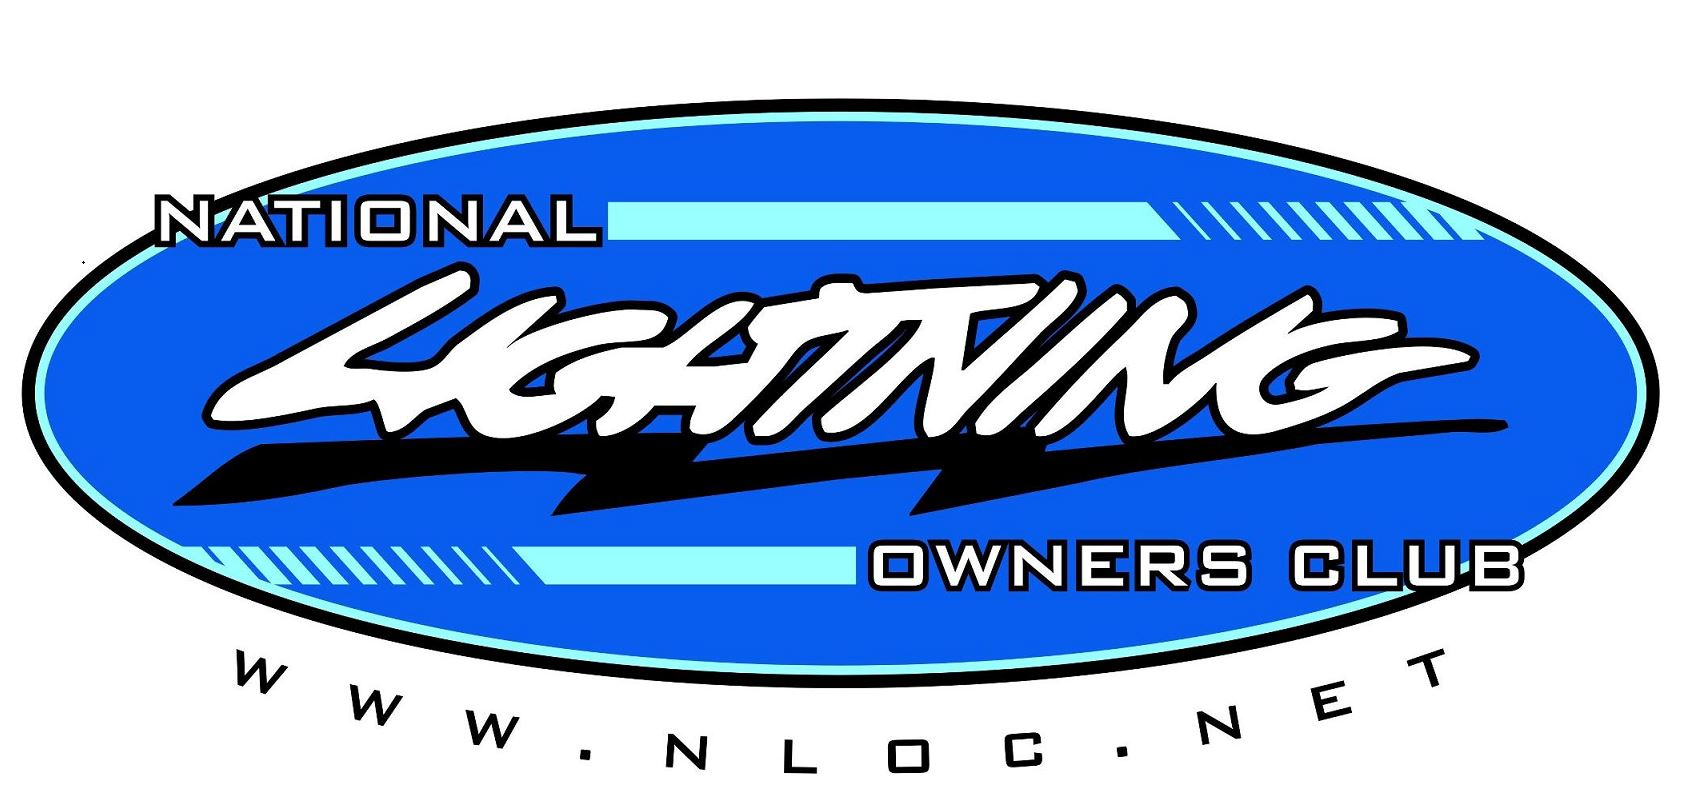 National Lightning Owner's Club